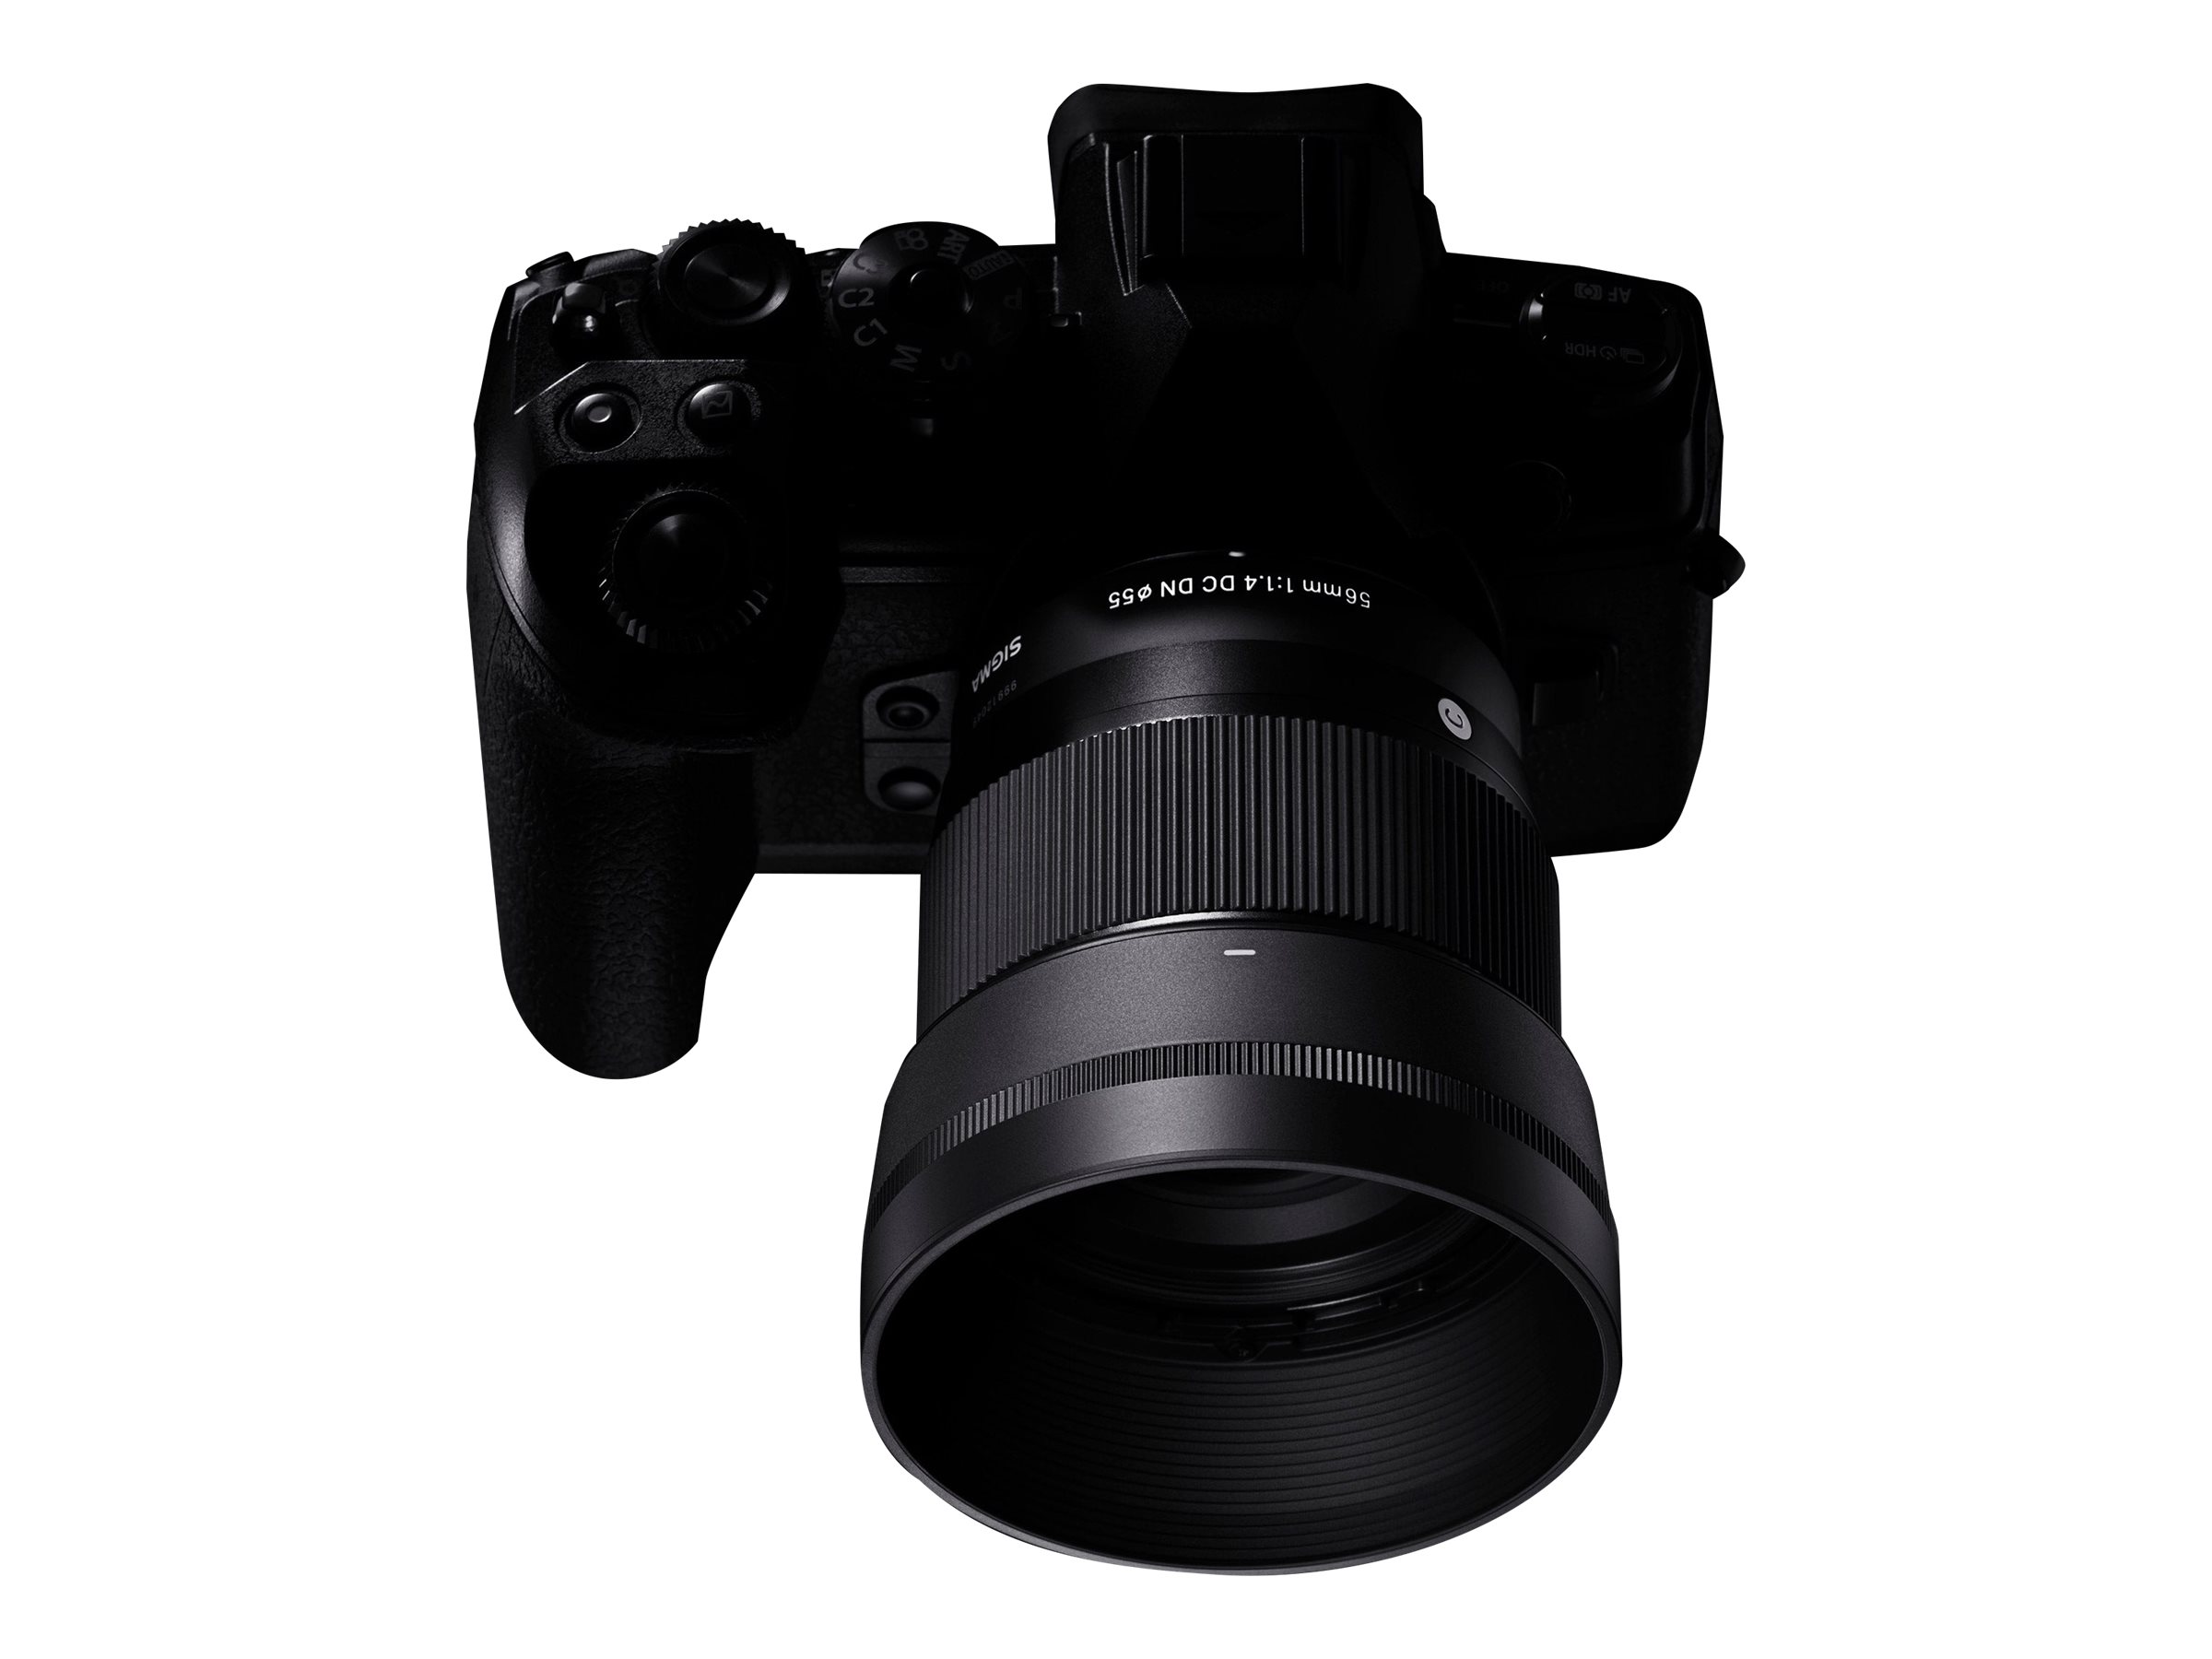 Sigma 56mm F/1.4 DC DN Lens for Sony - C56DCDNSE